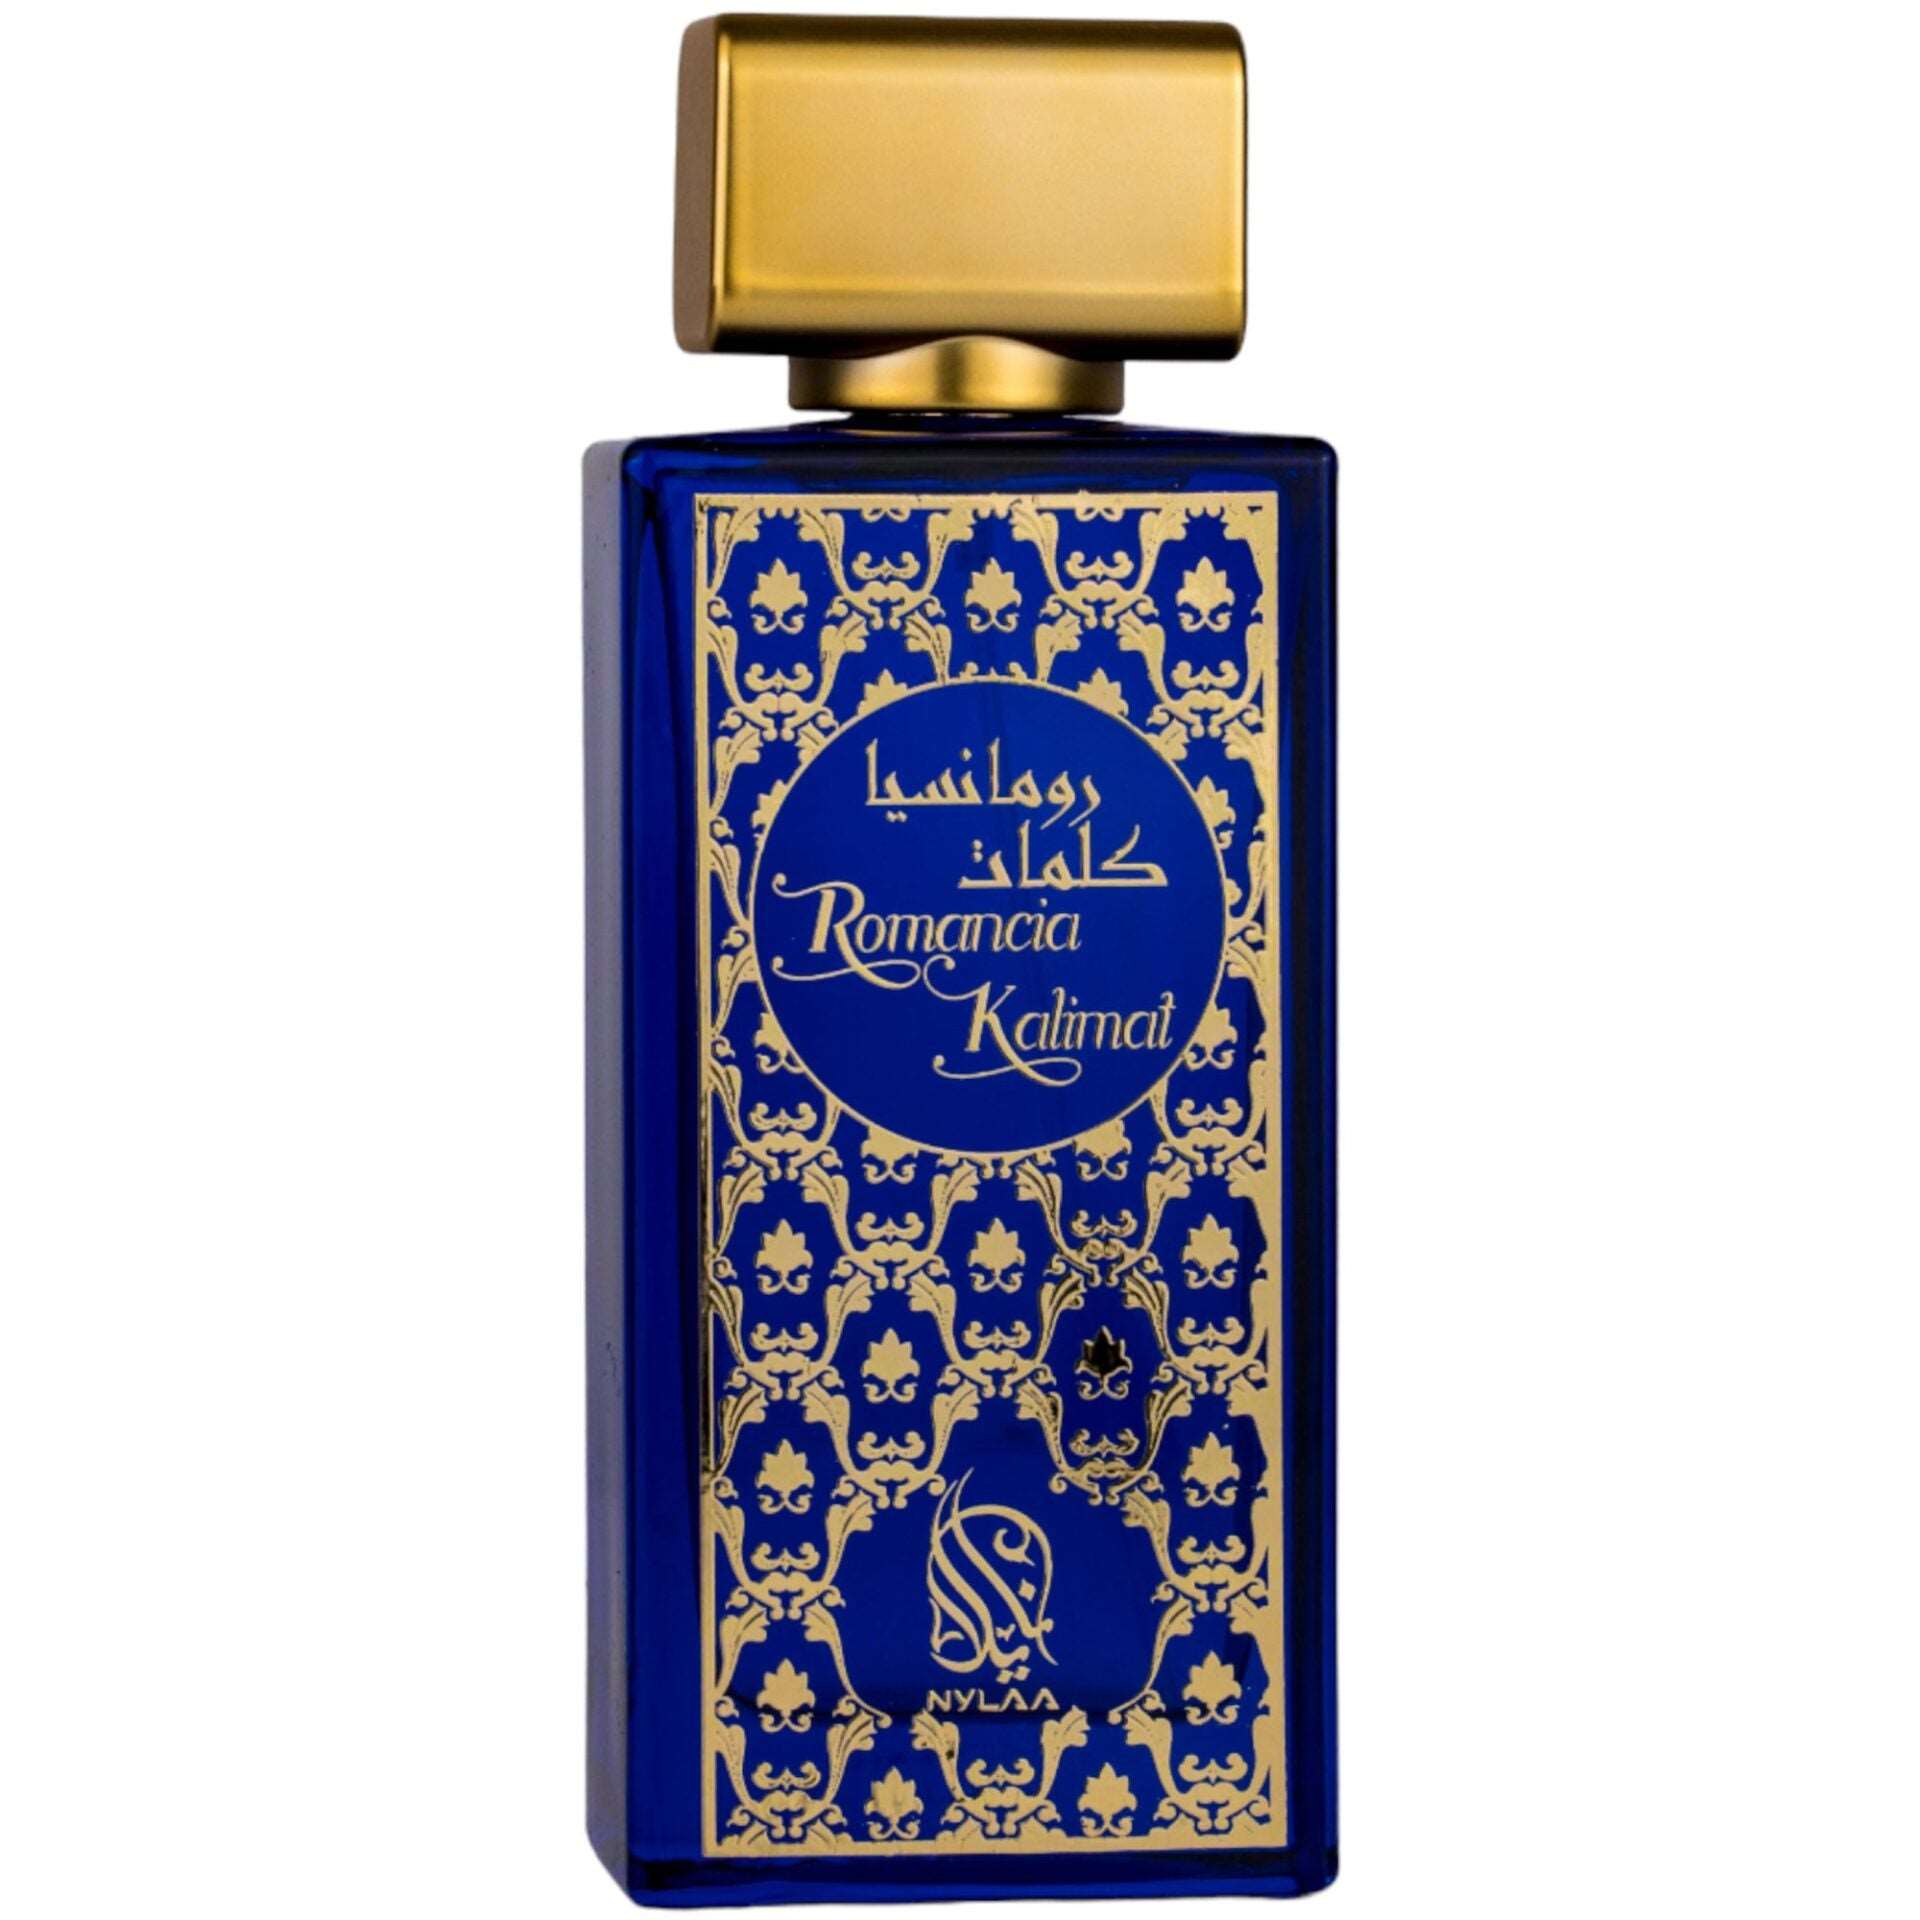 Romancia Kalimat 100ml - Dubai Collaction Parfum